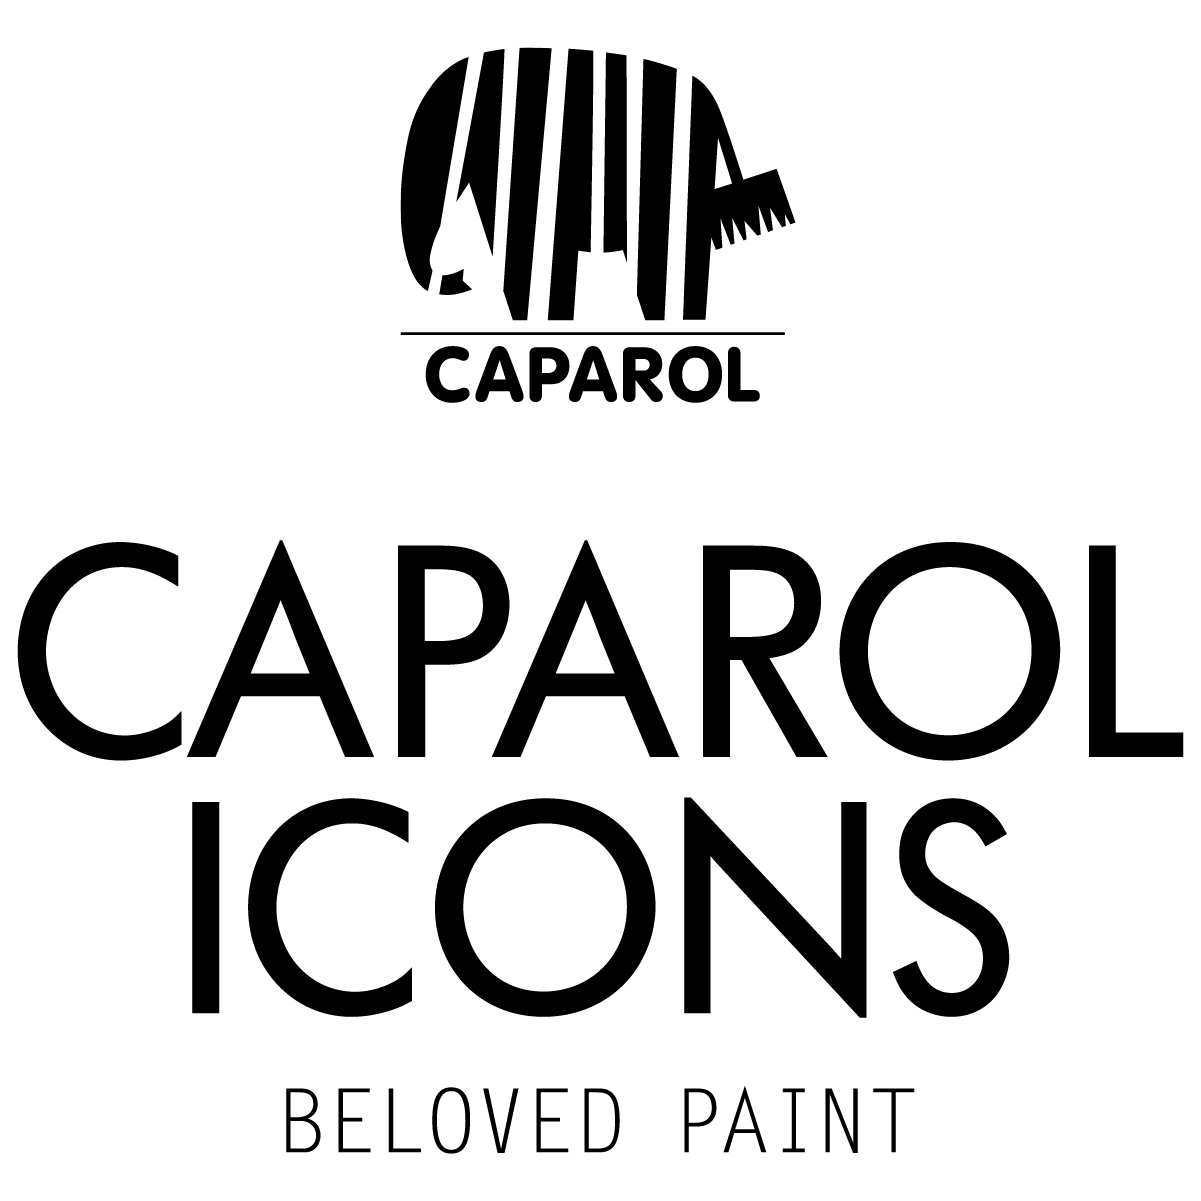 Caparol Icons